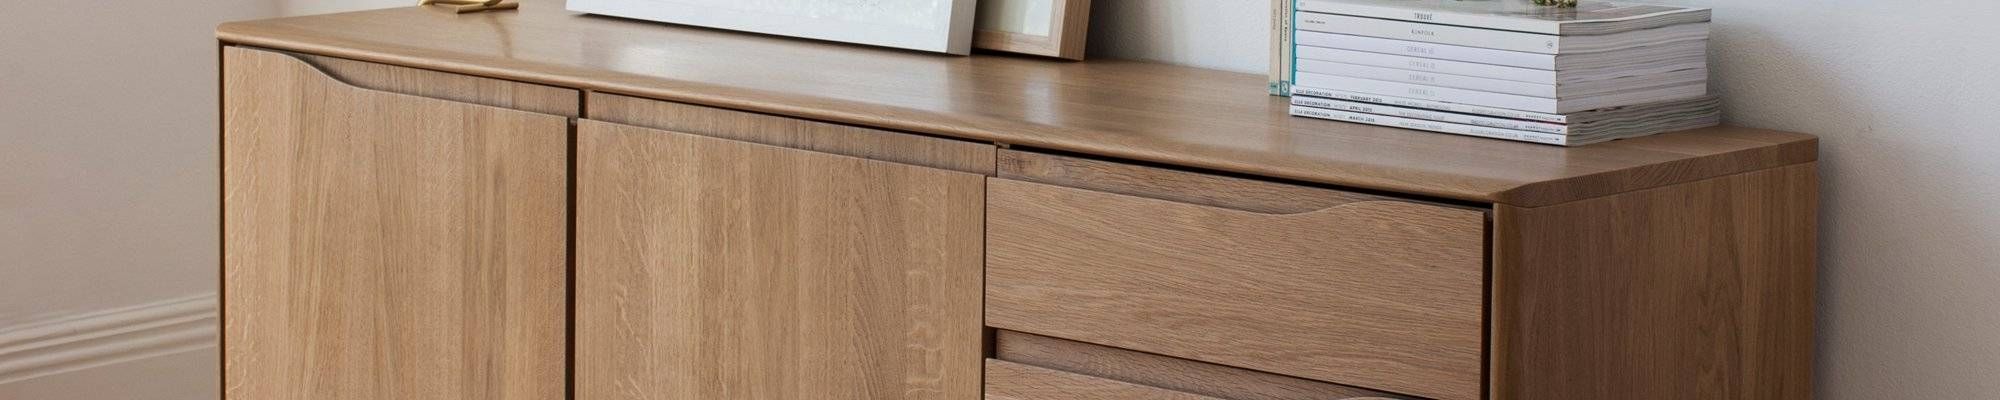 Dark Wood Sideboards | Designer Contemporary Sideboards | Heal's For Wood Sideboards (View 6 of 20)